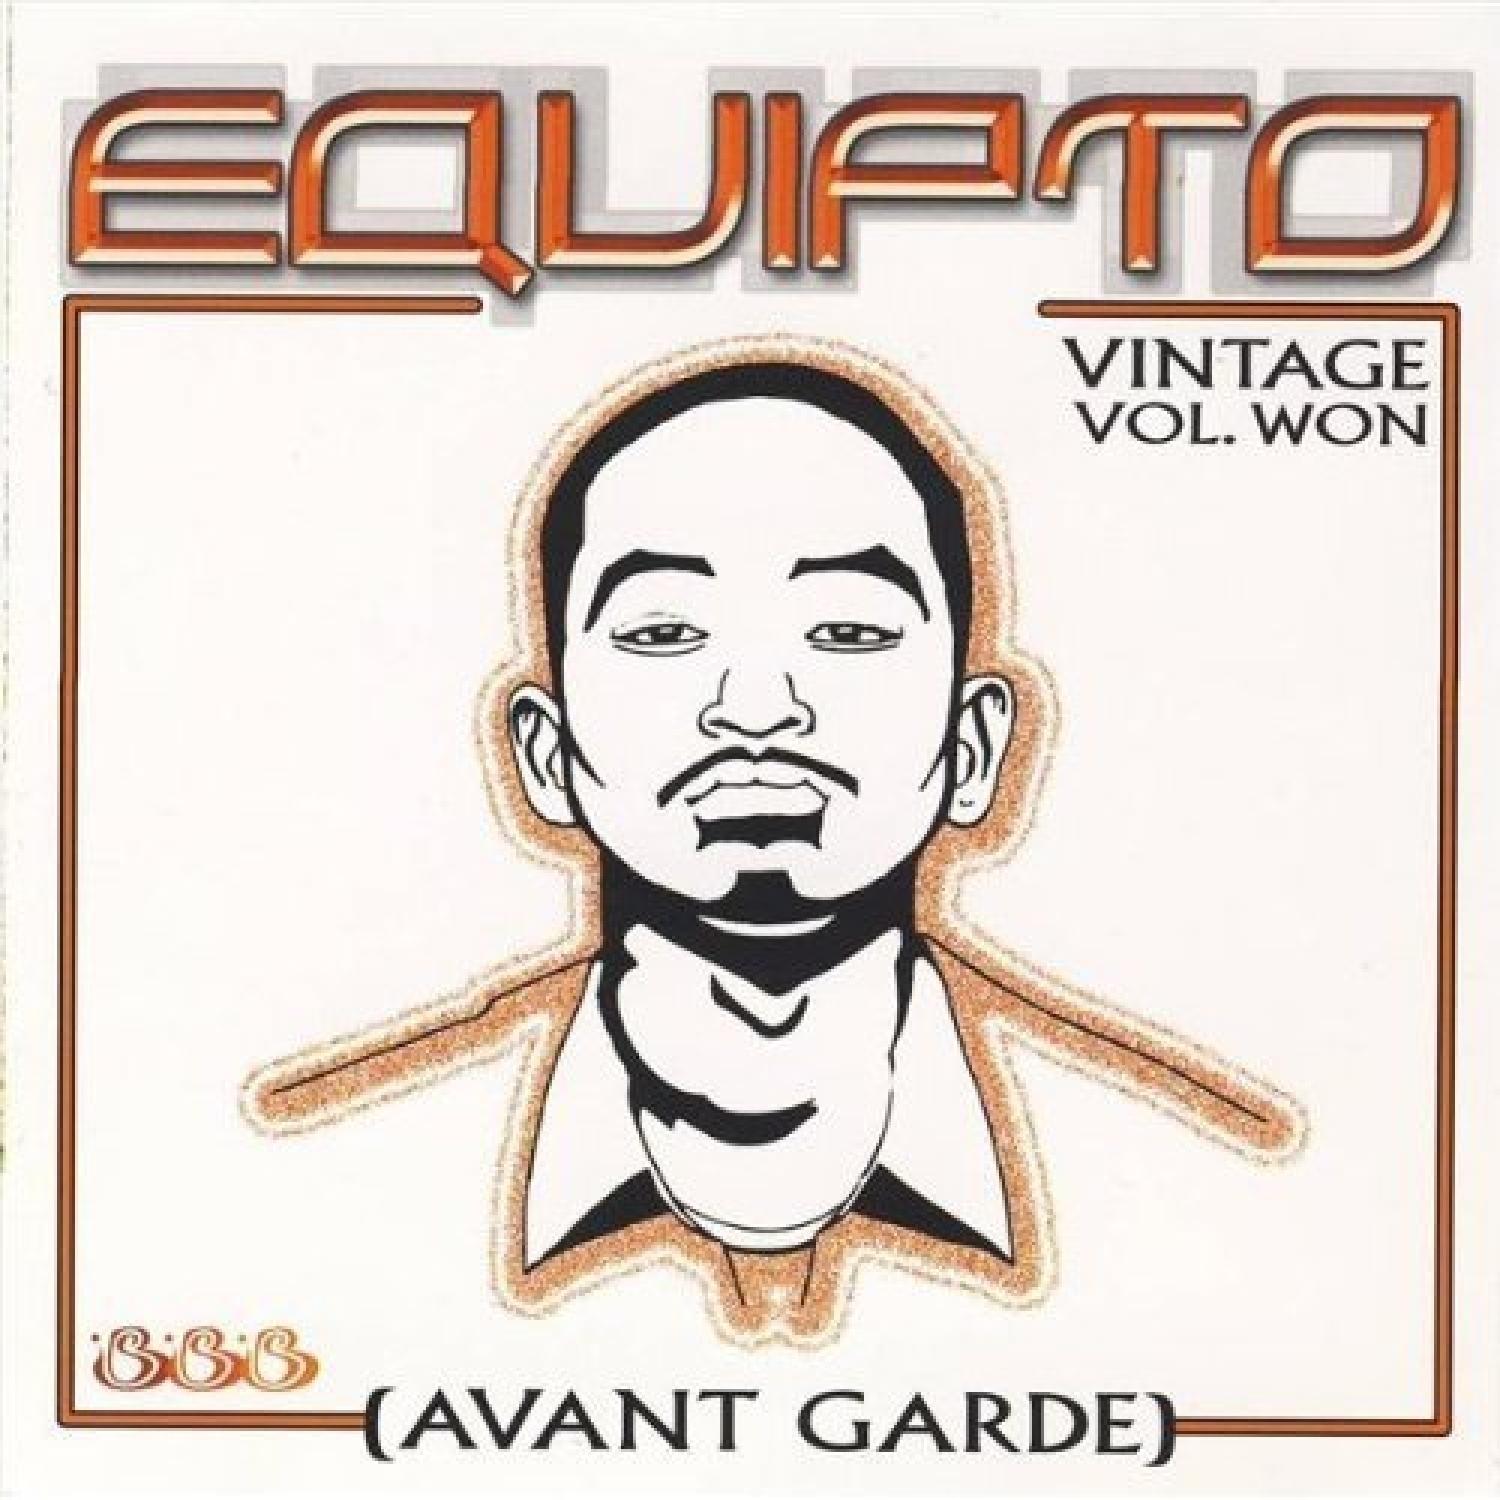 Vintage, Vol. Won: Avant Garde